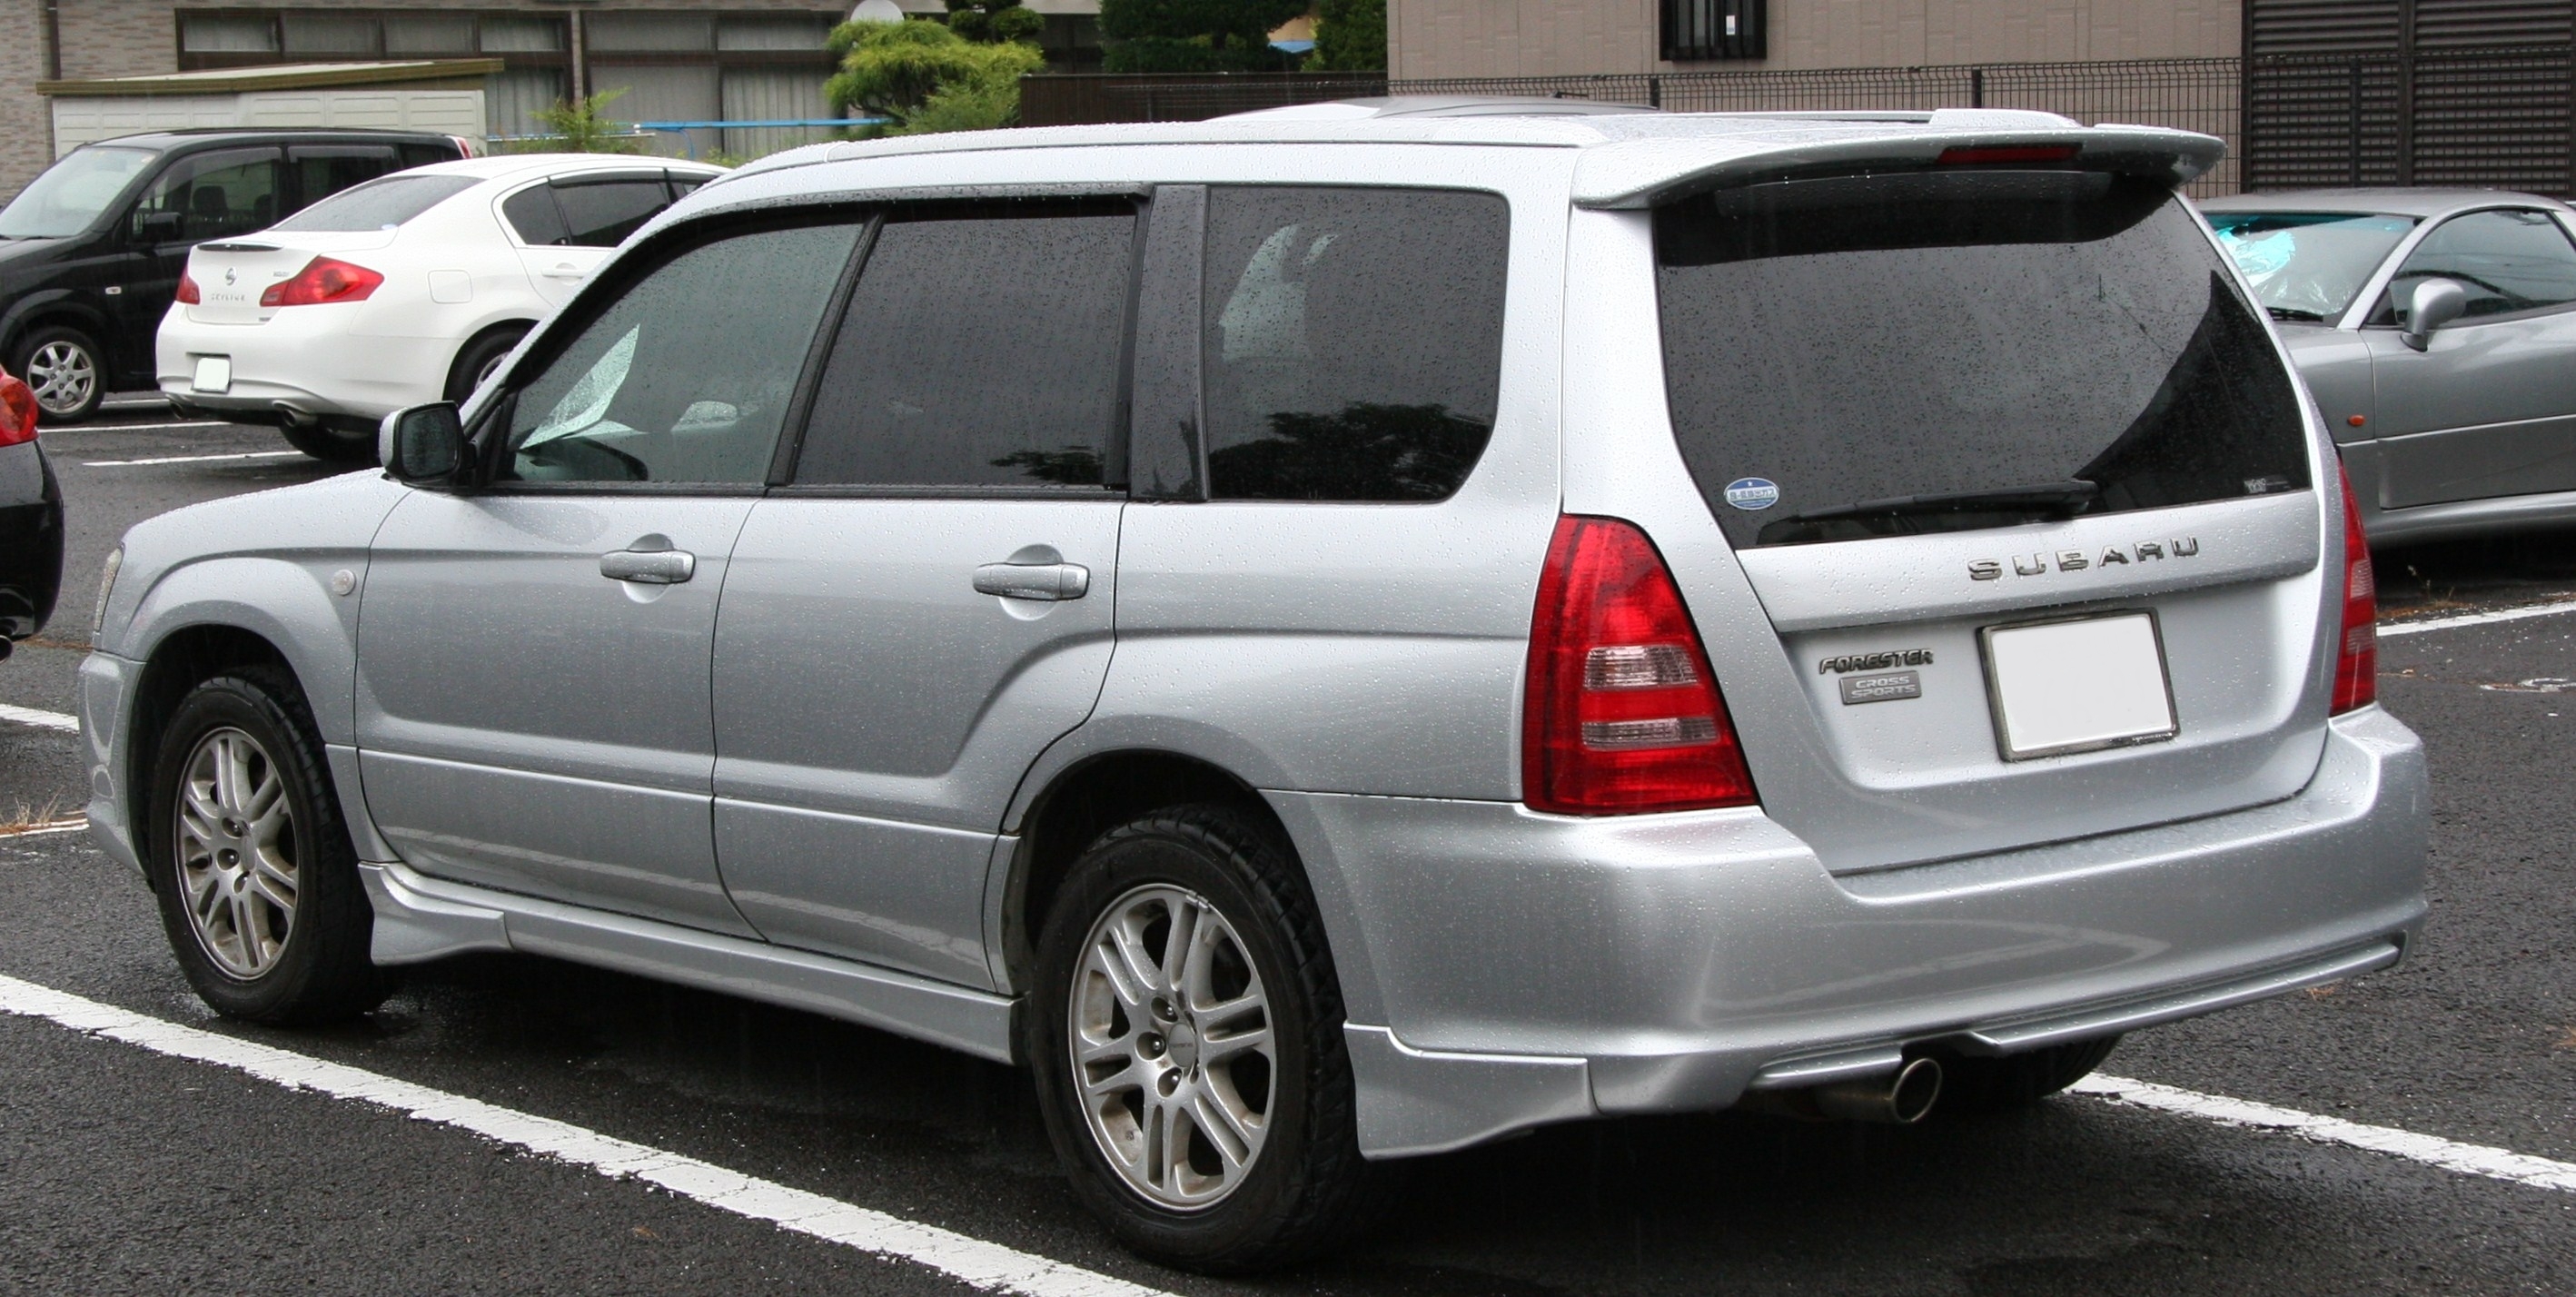 Subaru Forester 2002